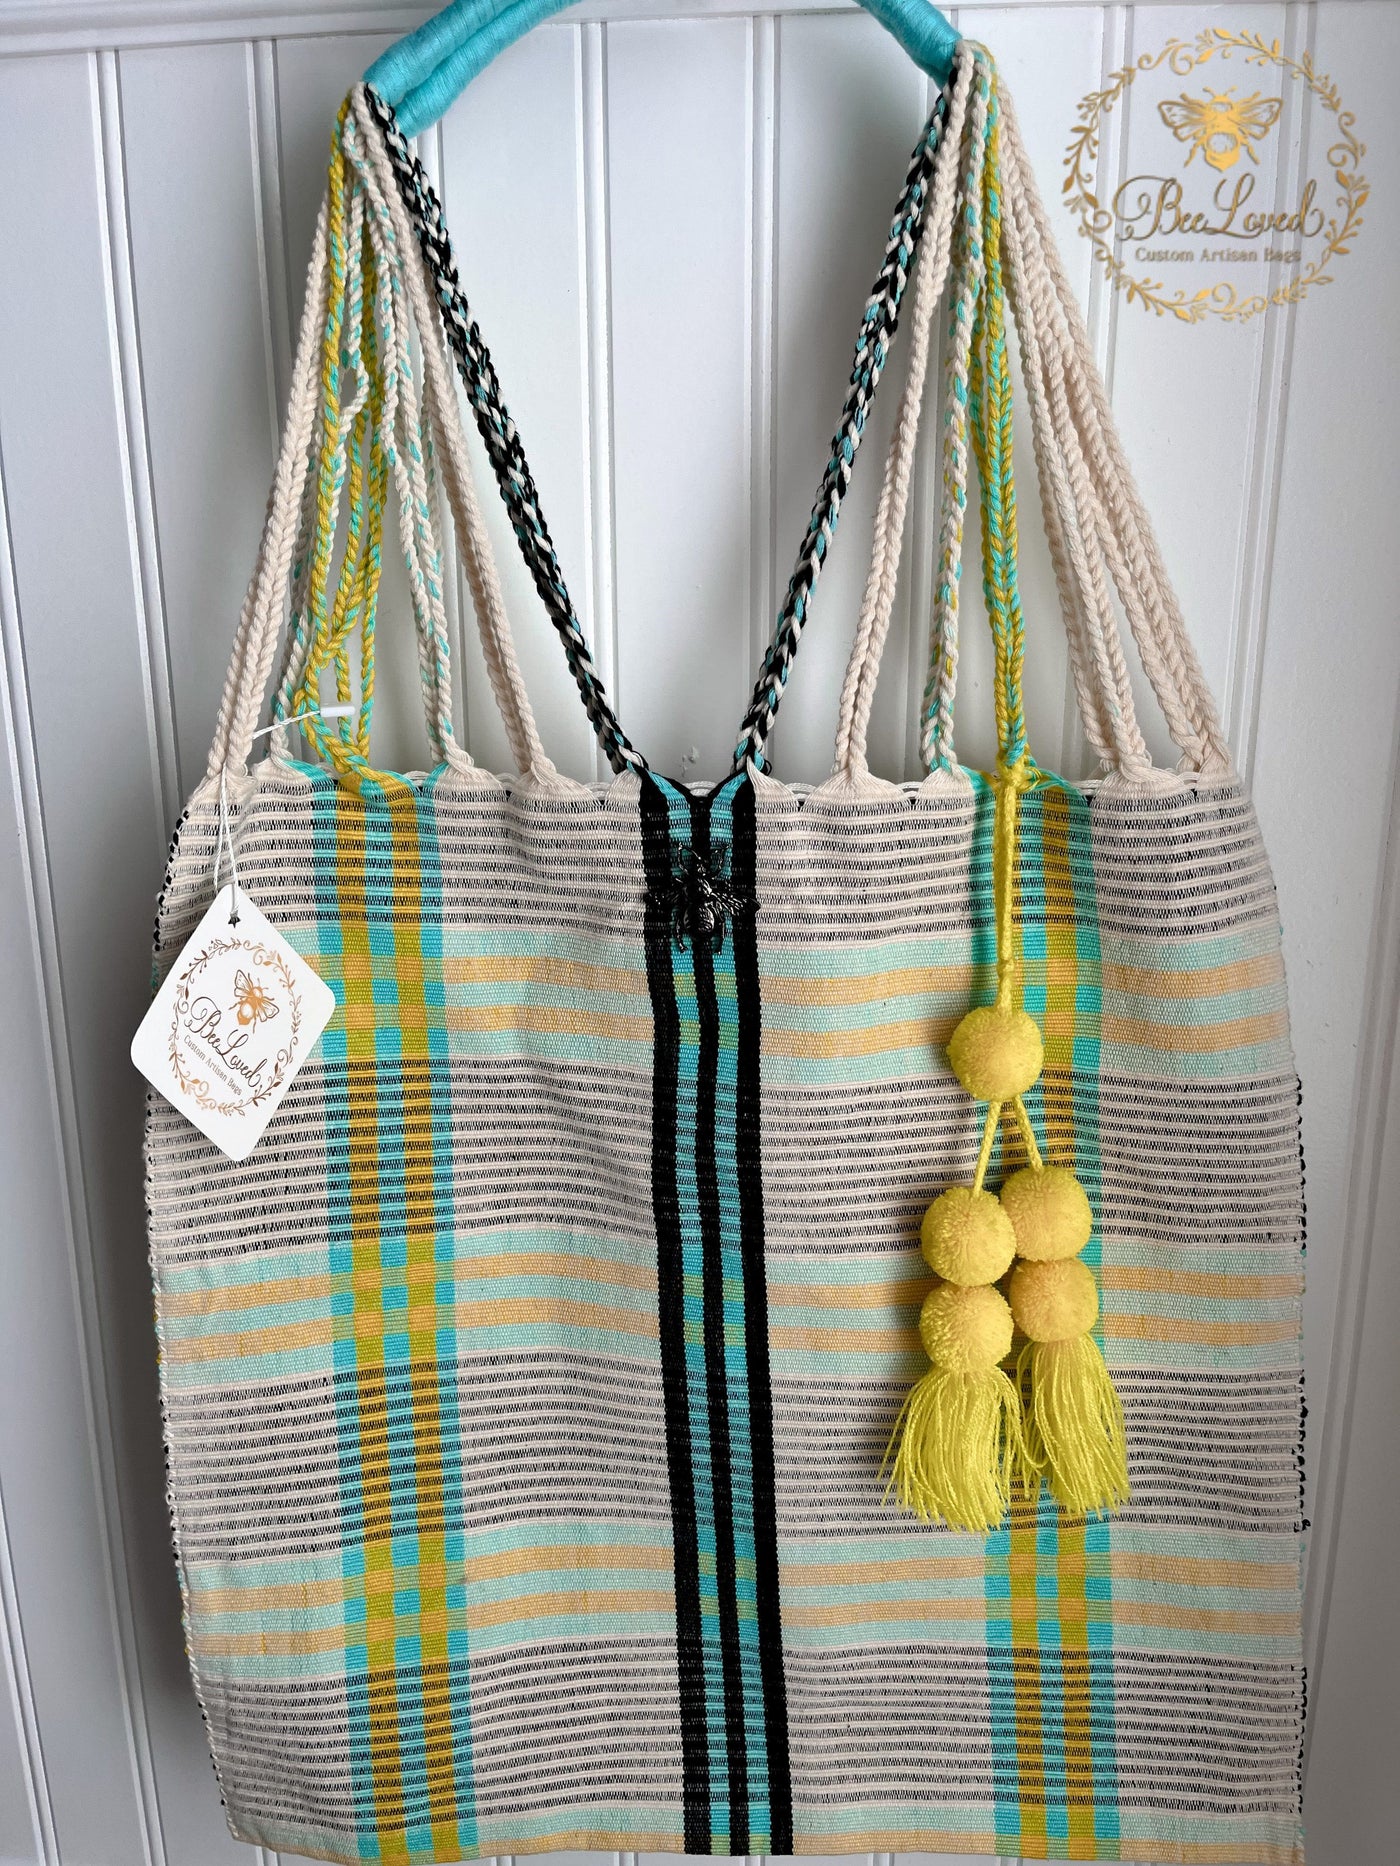 BeeLoved Custom Artisan Bags and Gifts Lemon Lime Fabric Tote Bag